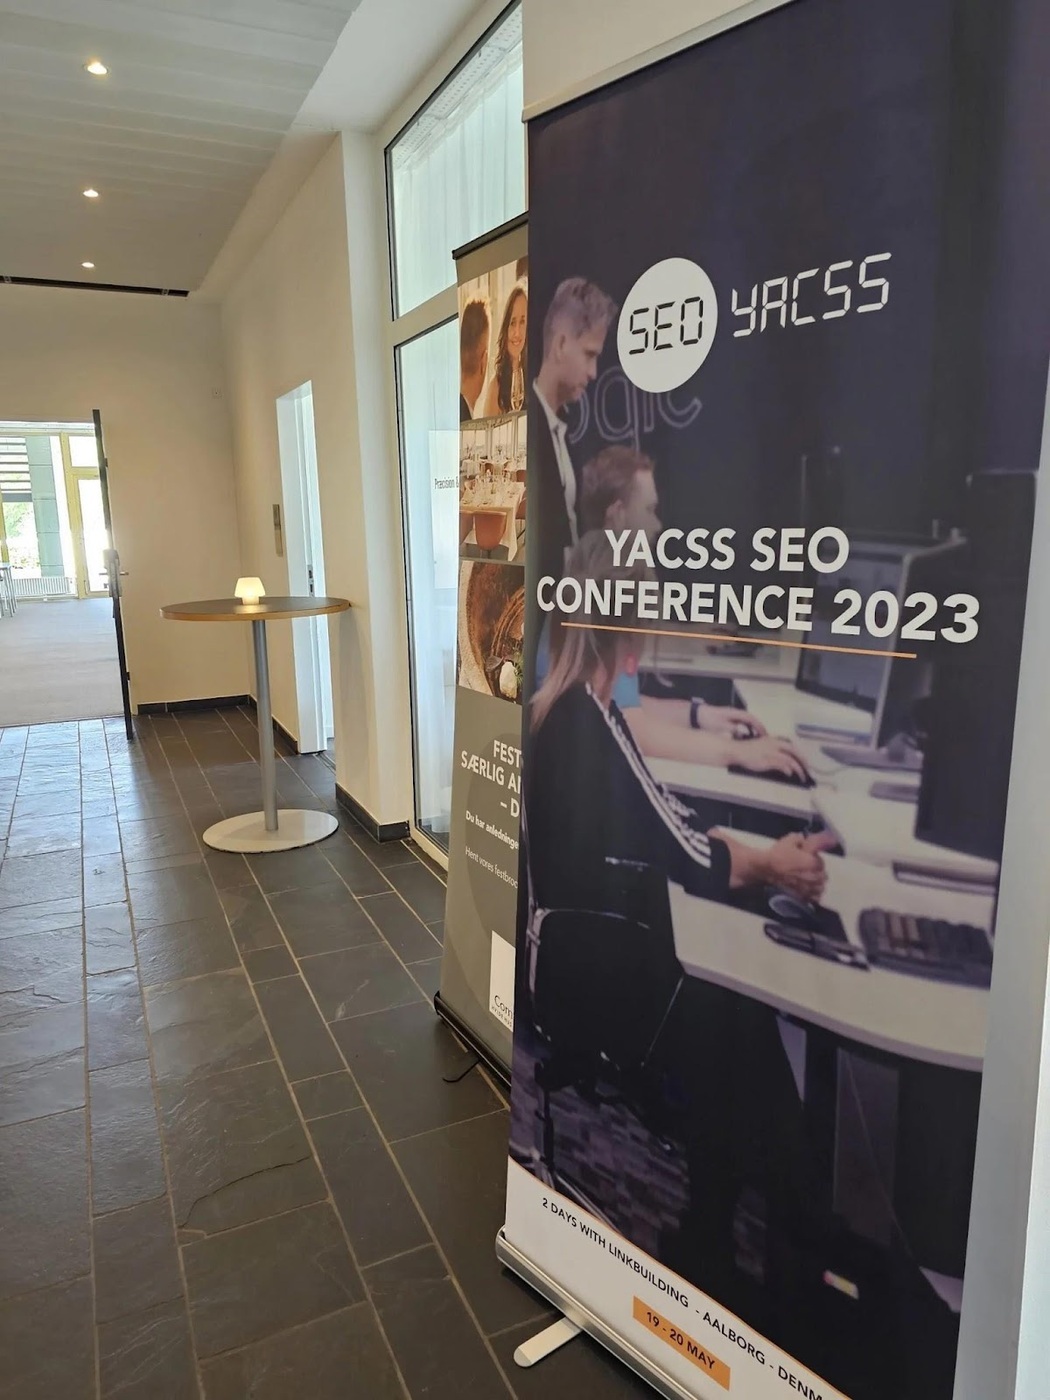 YACSS was created by Jesper Nissen, an SEO expert, entrepreneur, and public speaker.